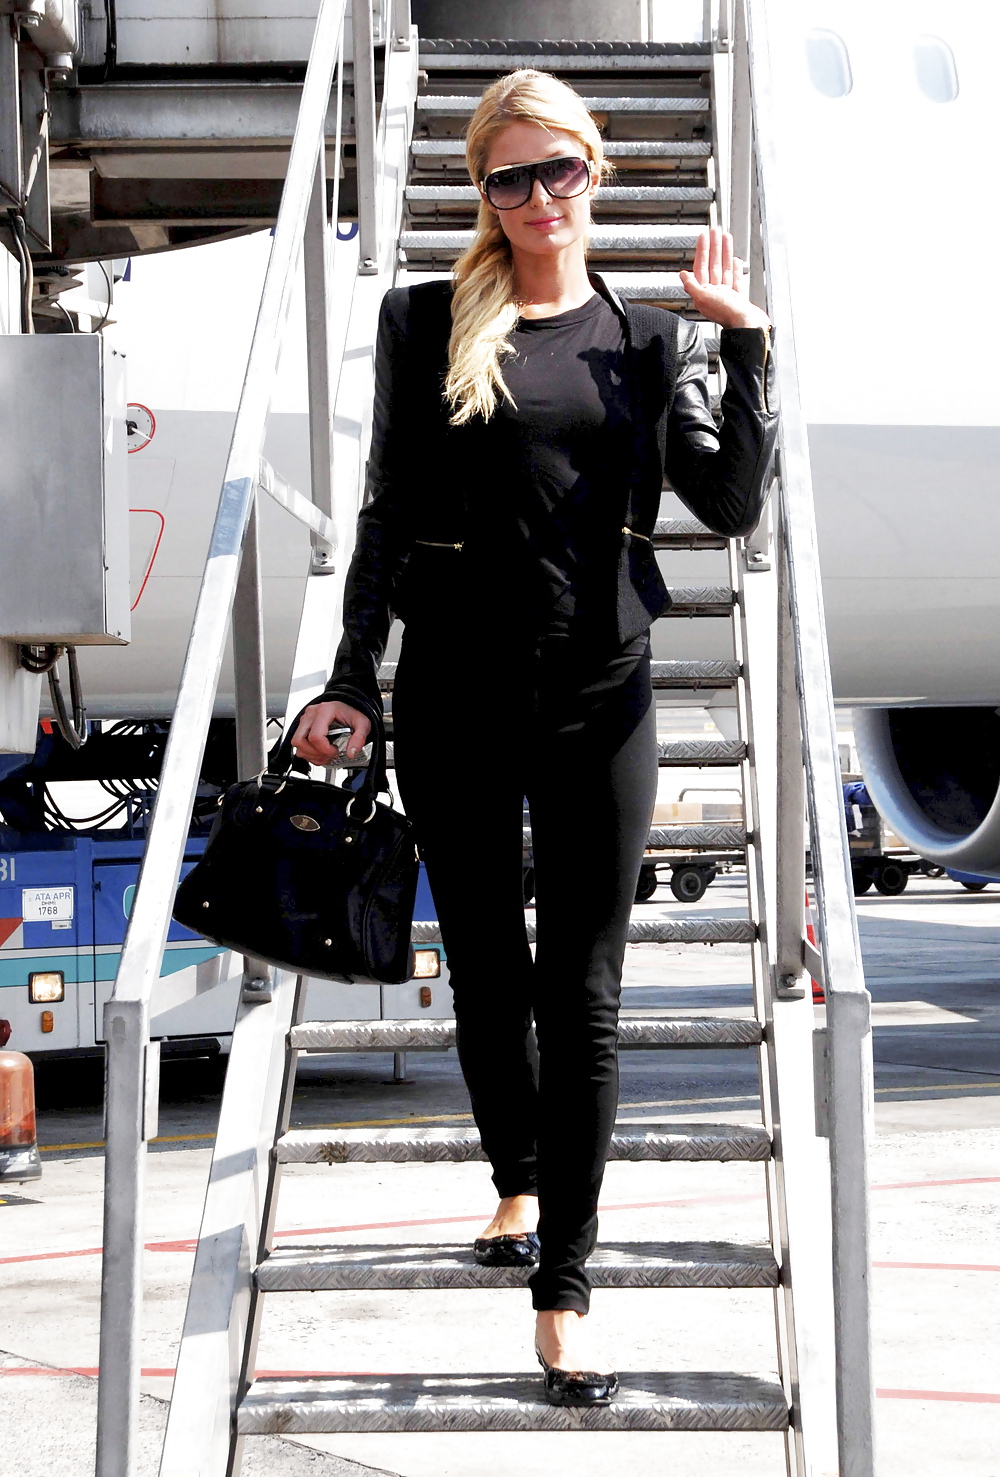 Paris Hilton Braless at the Airport Istanbul 08.10.12 #14001016